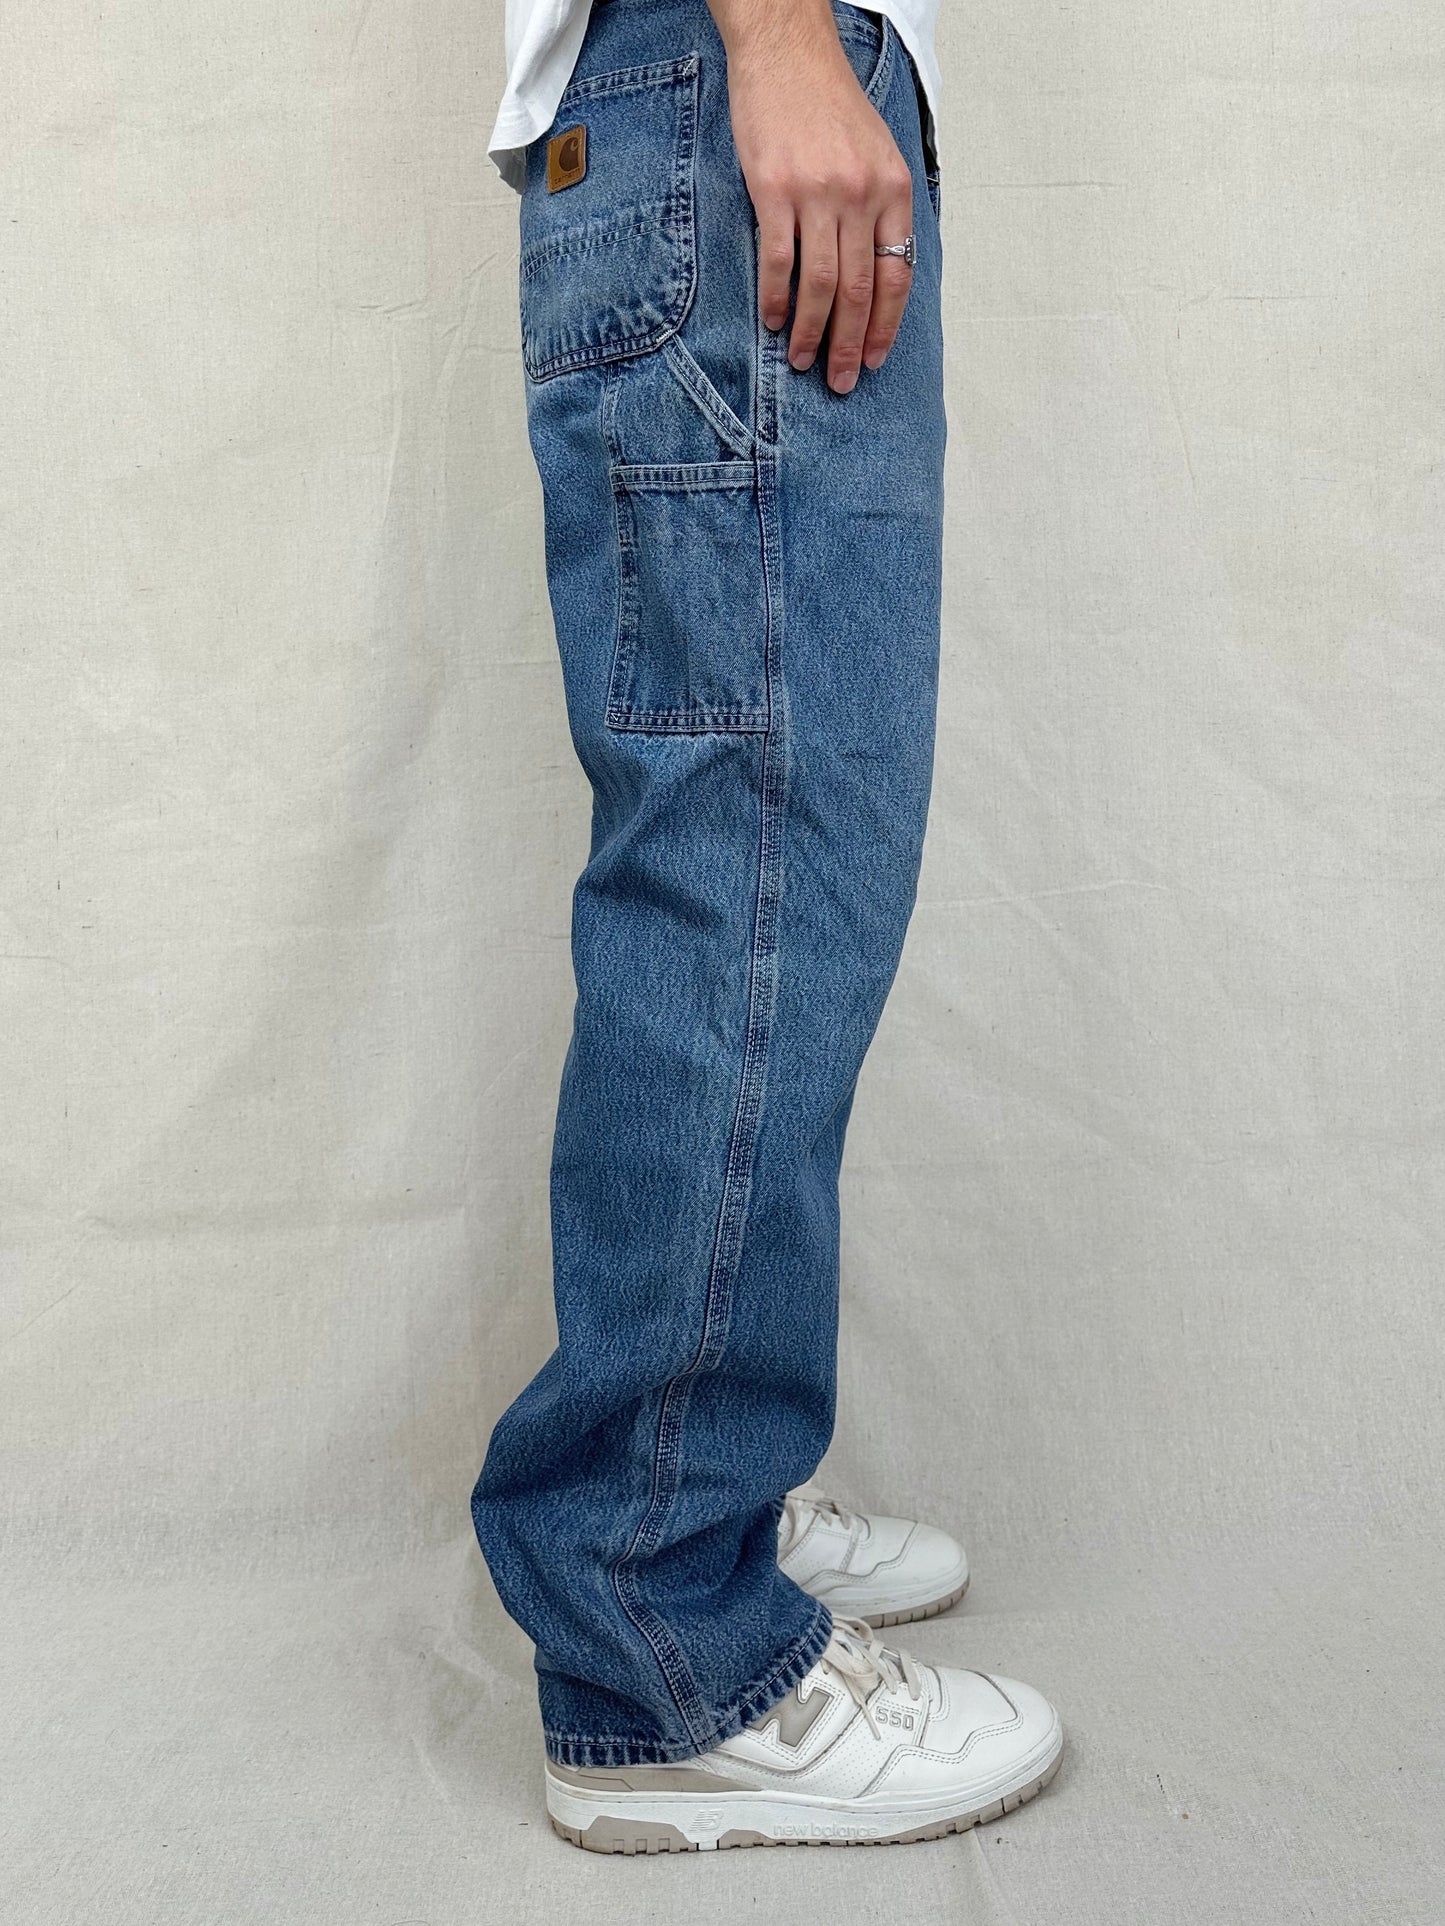 90's Carhartt Vintage Carpenter Jeans Size 31x35